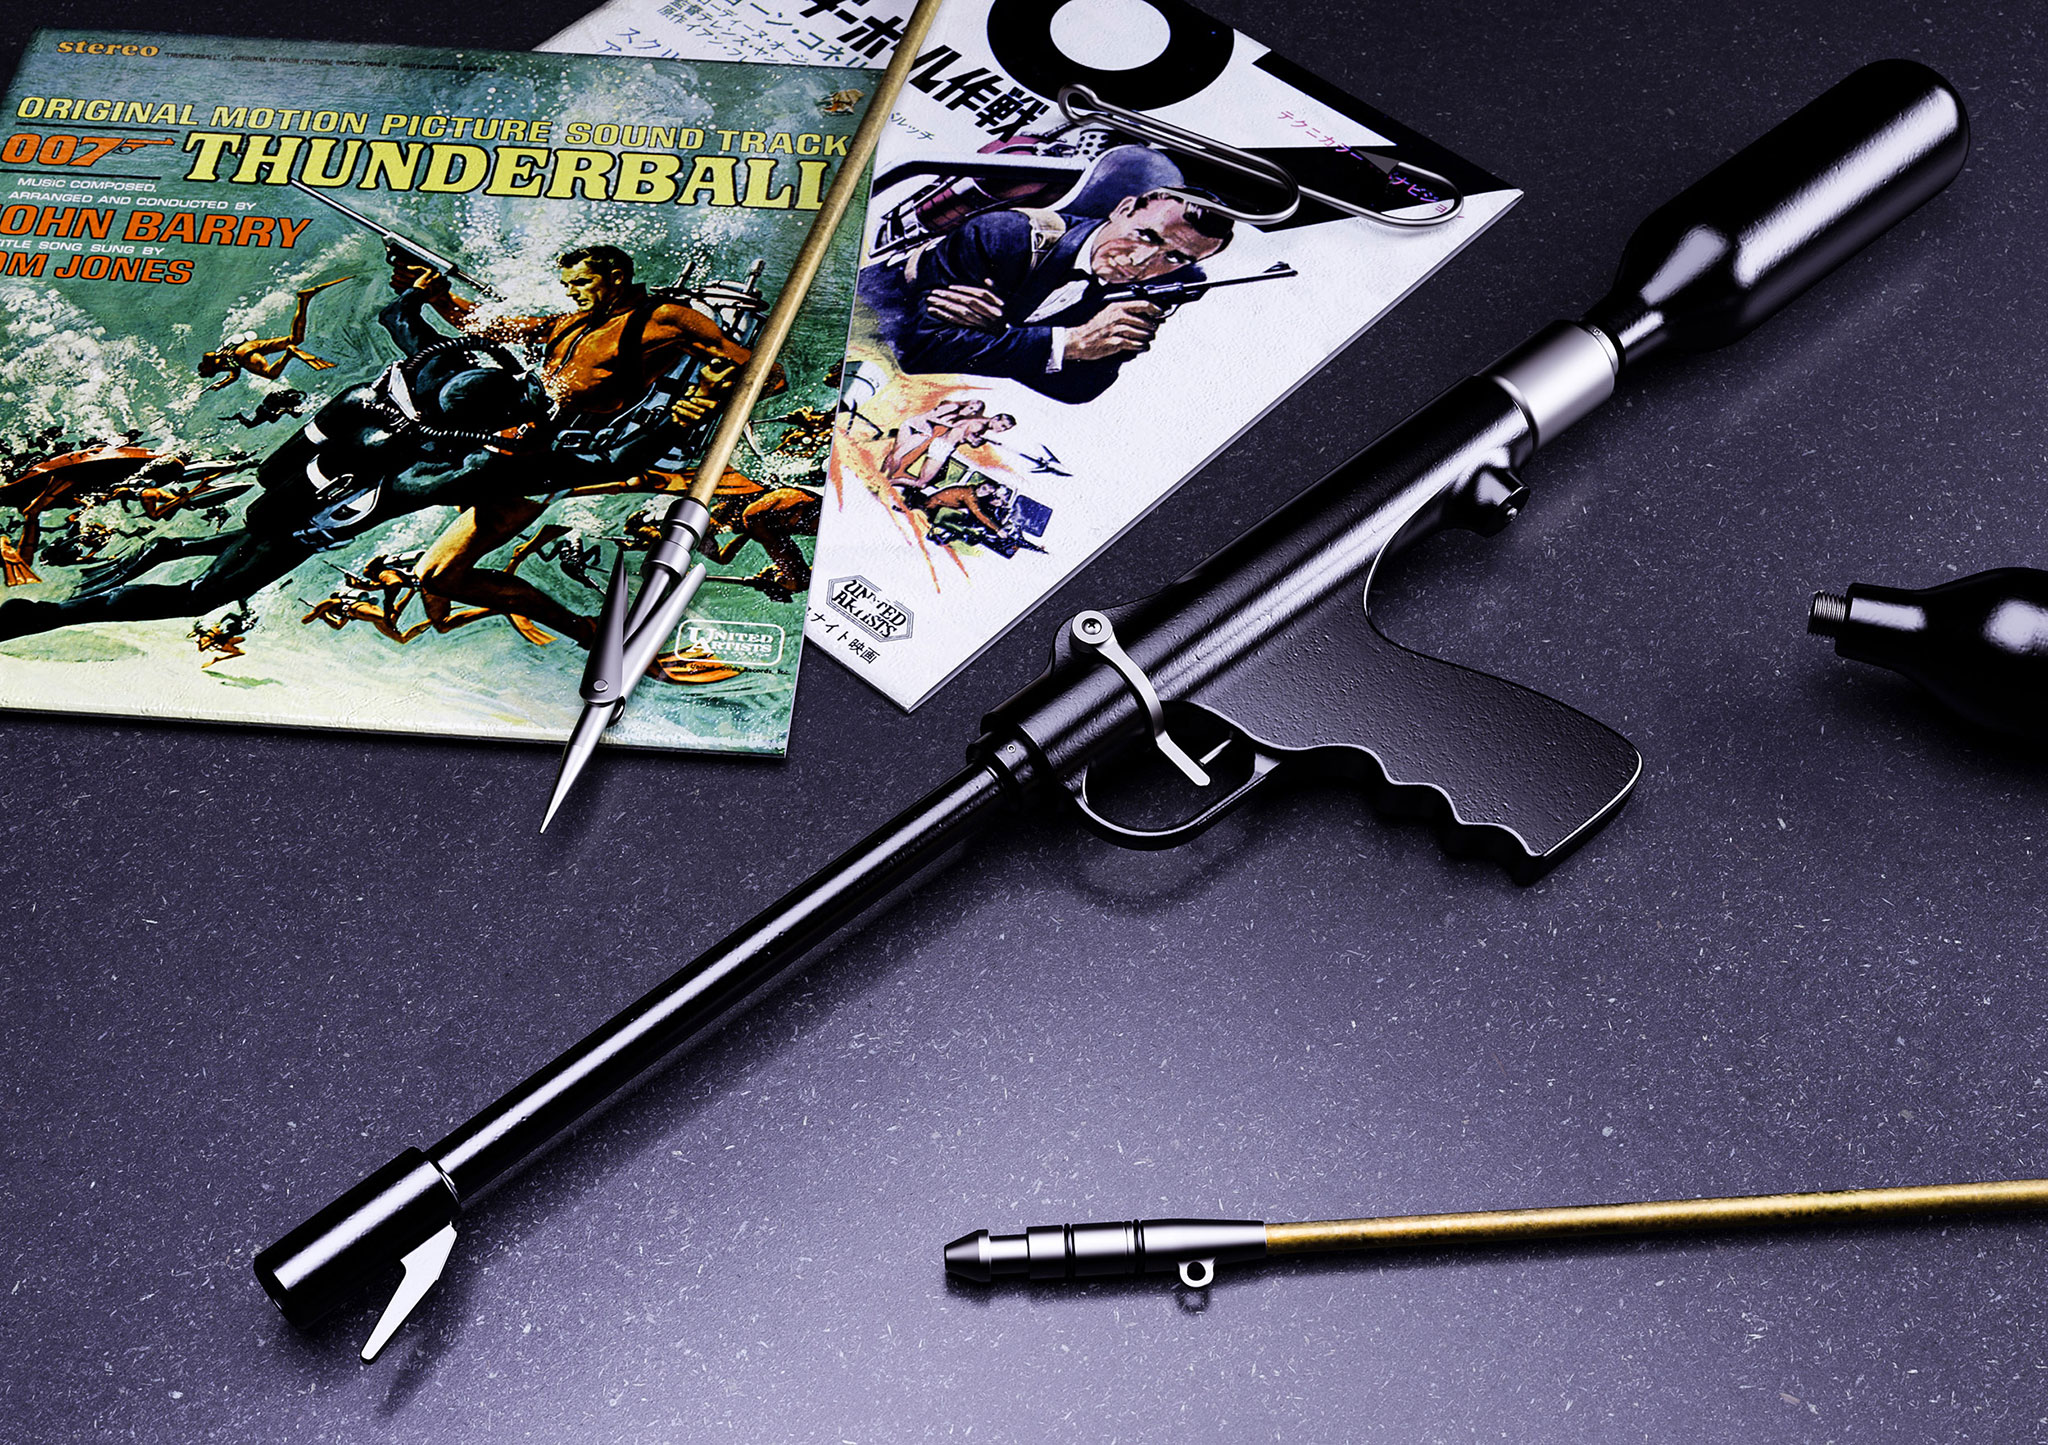 007 speargun found in Thunderball.